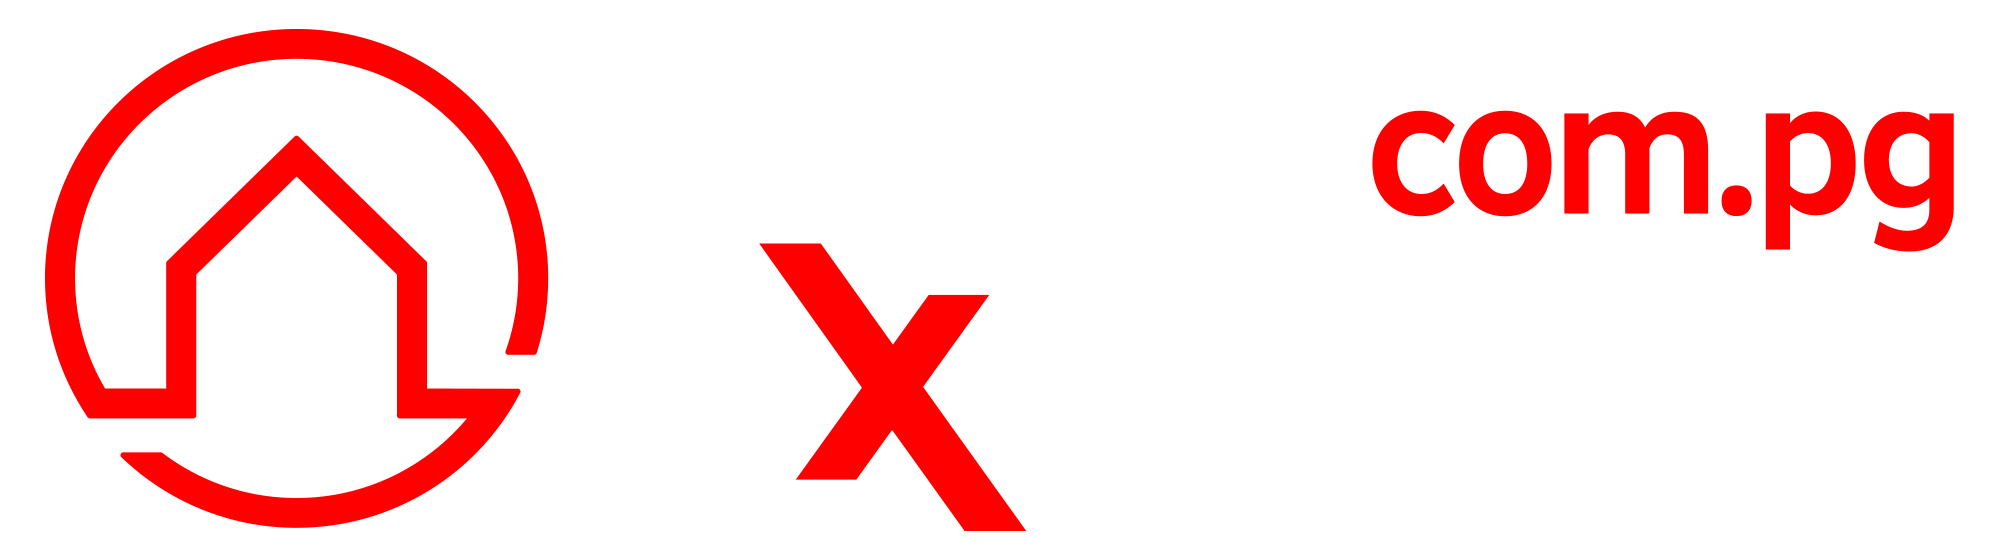 Hausples.com.pg Expo 2022